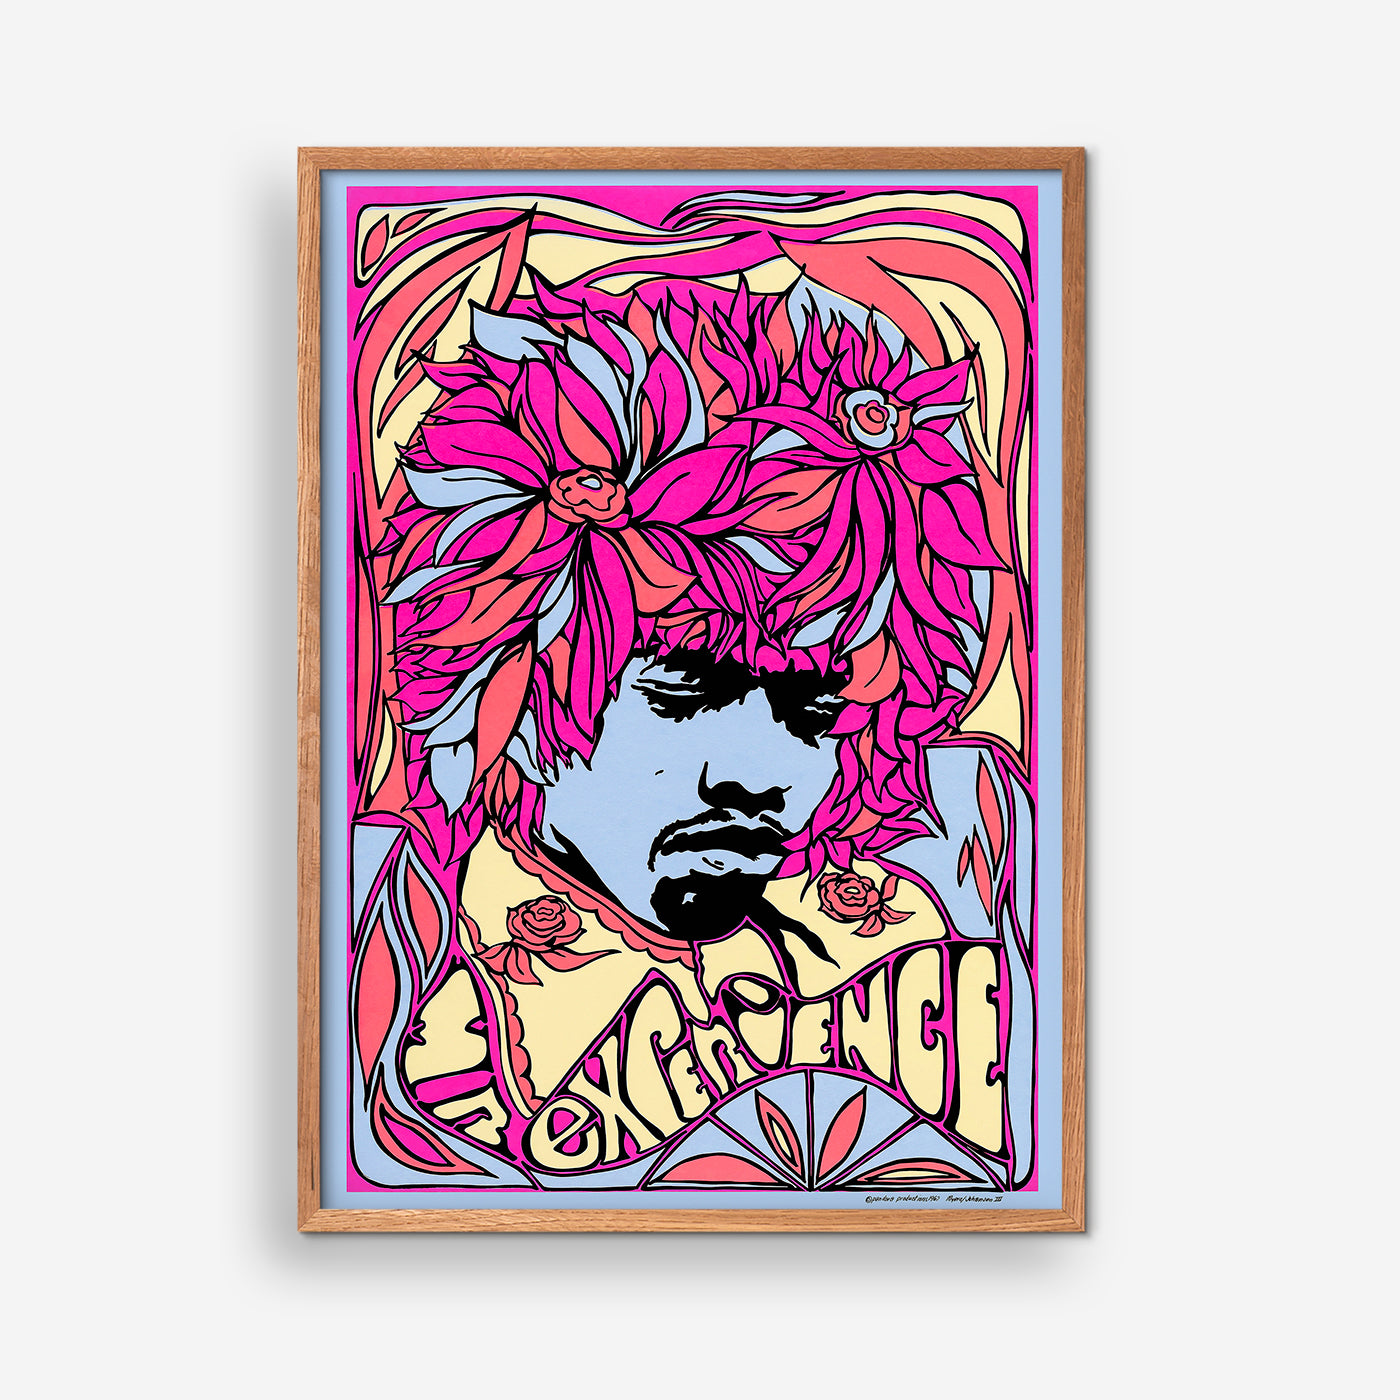 Jimi Hendrix music poster